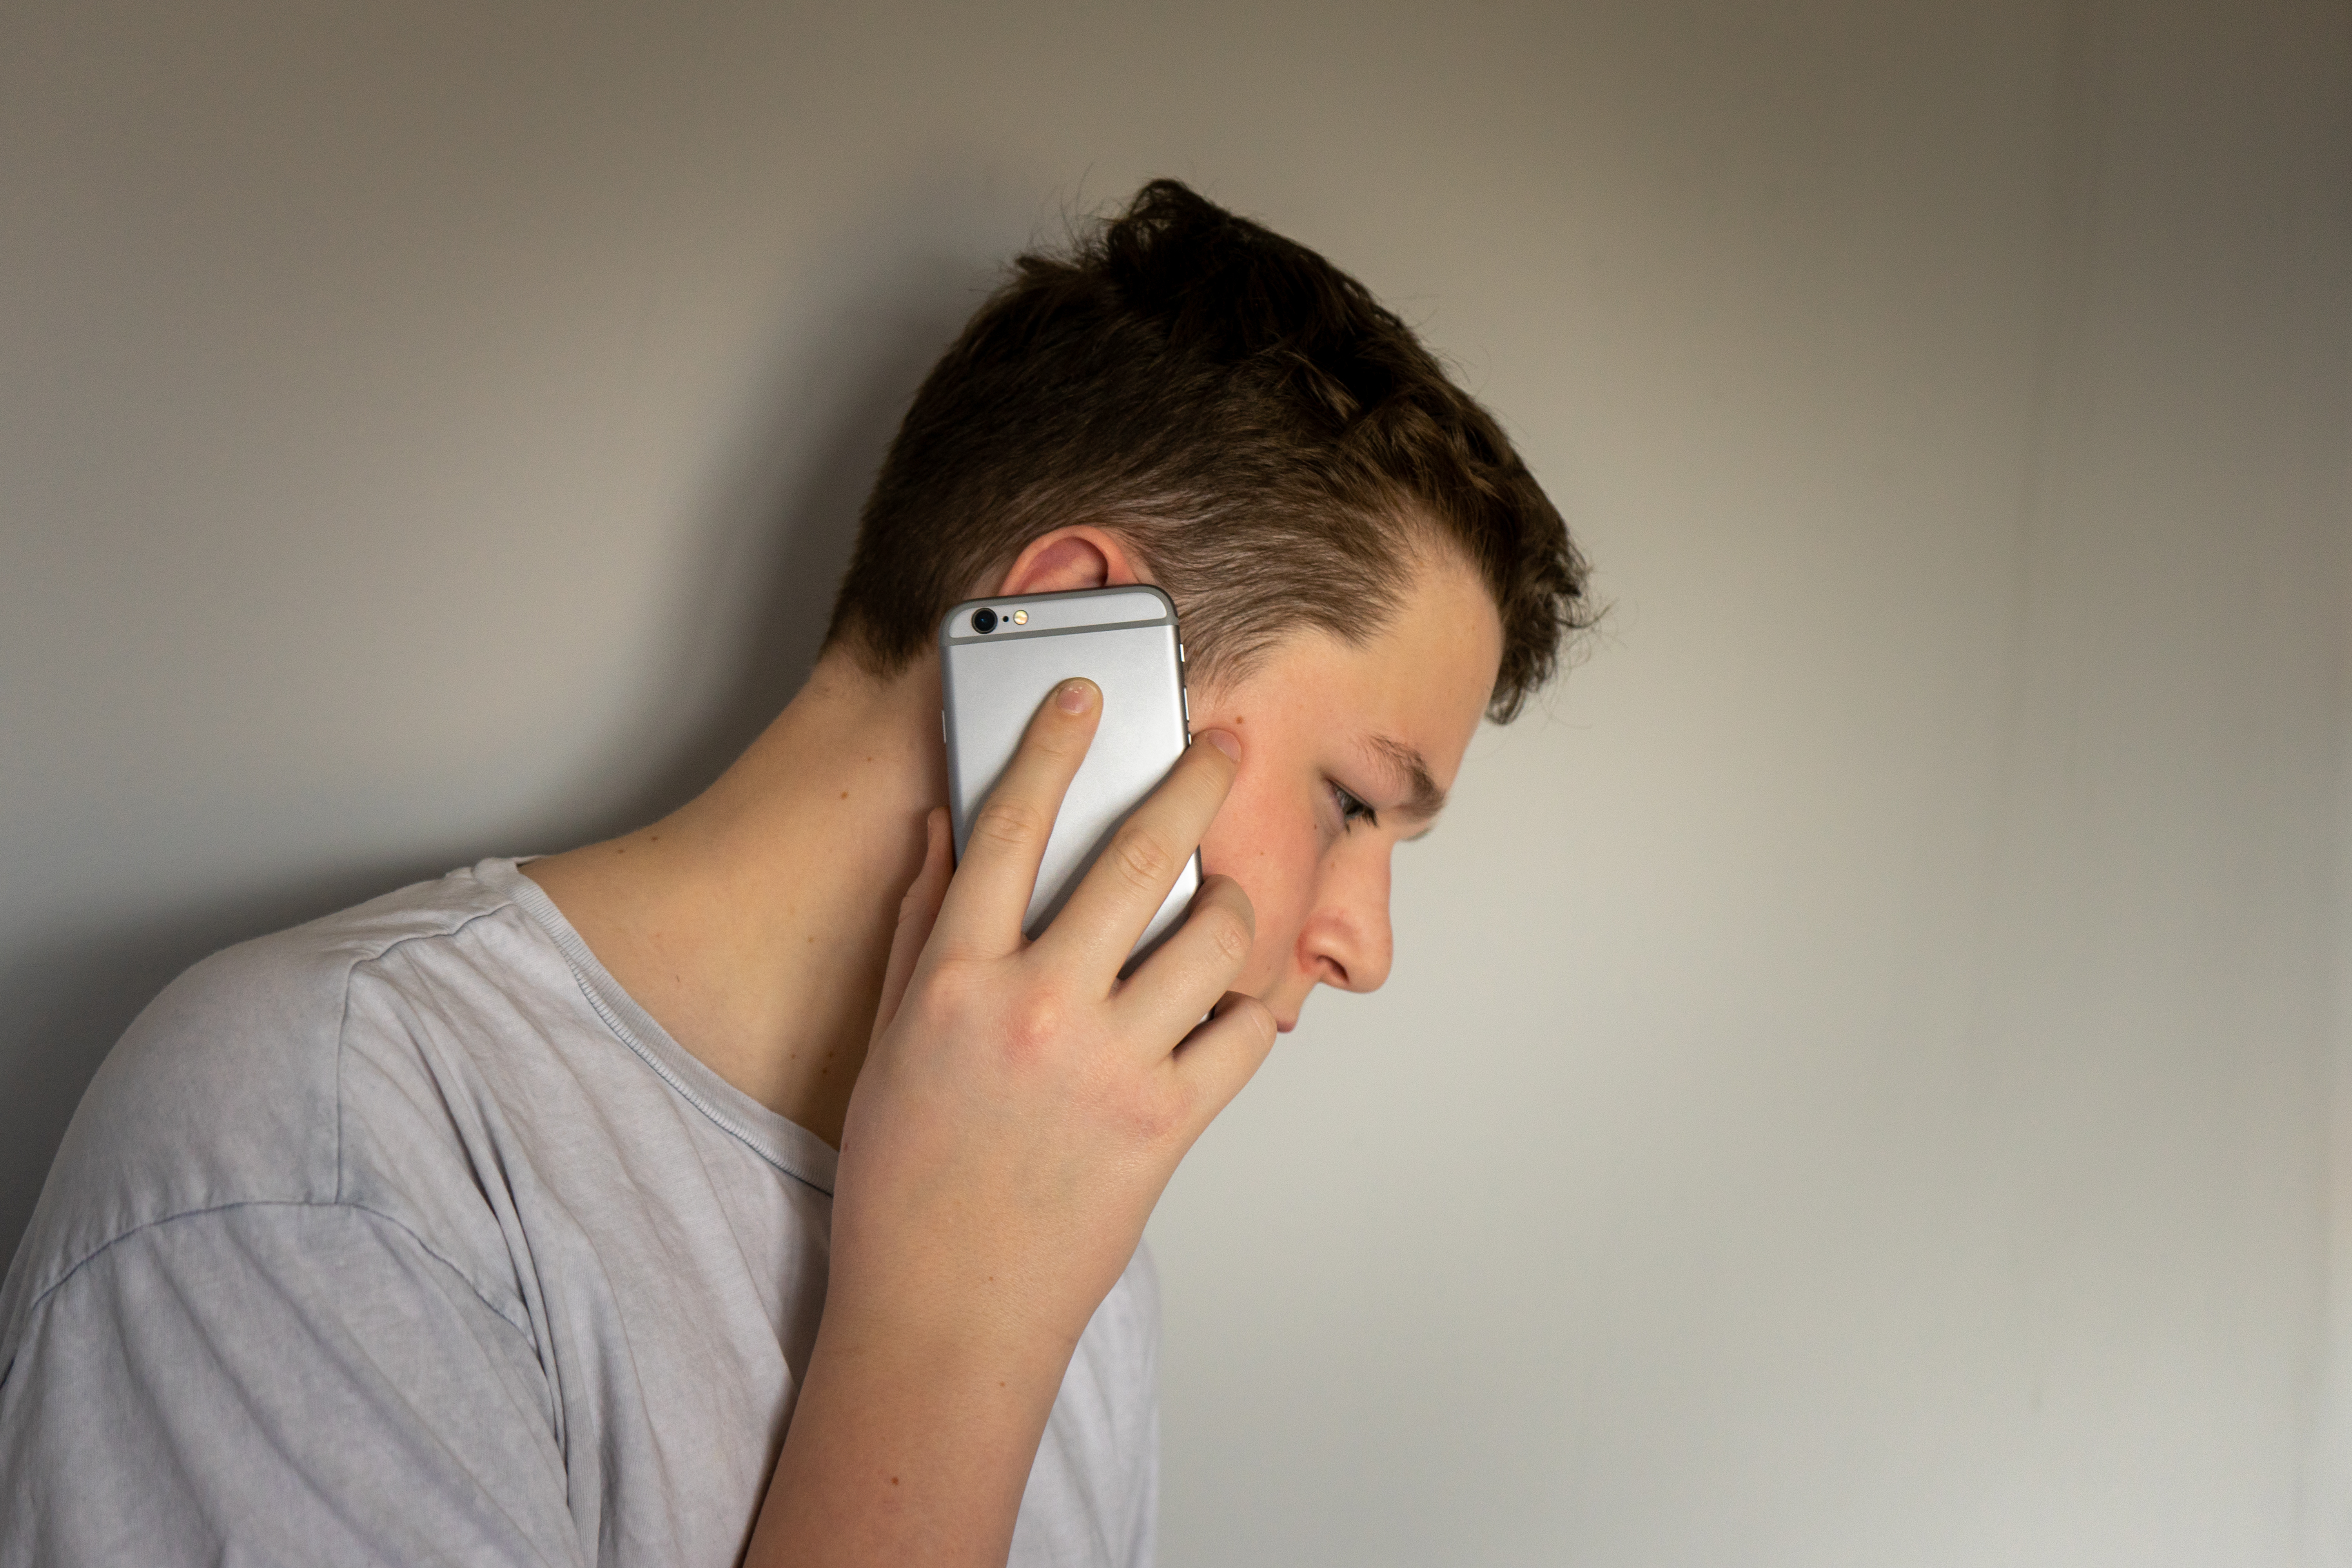 Teenage boy talking on the phone | Source: Shutterstock